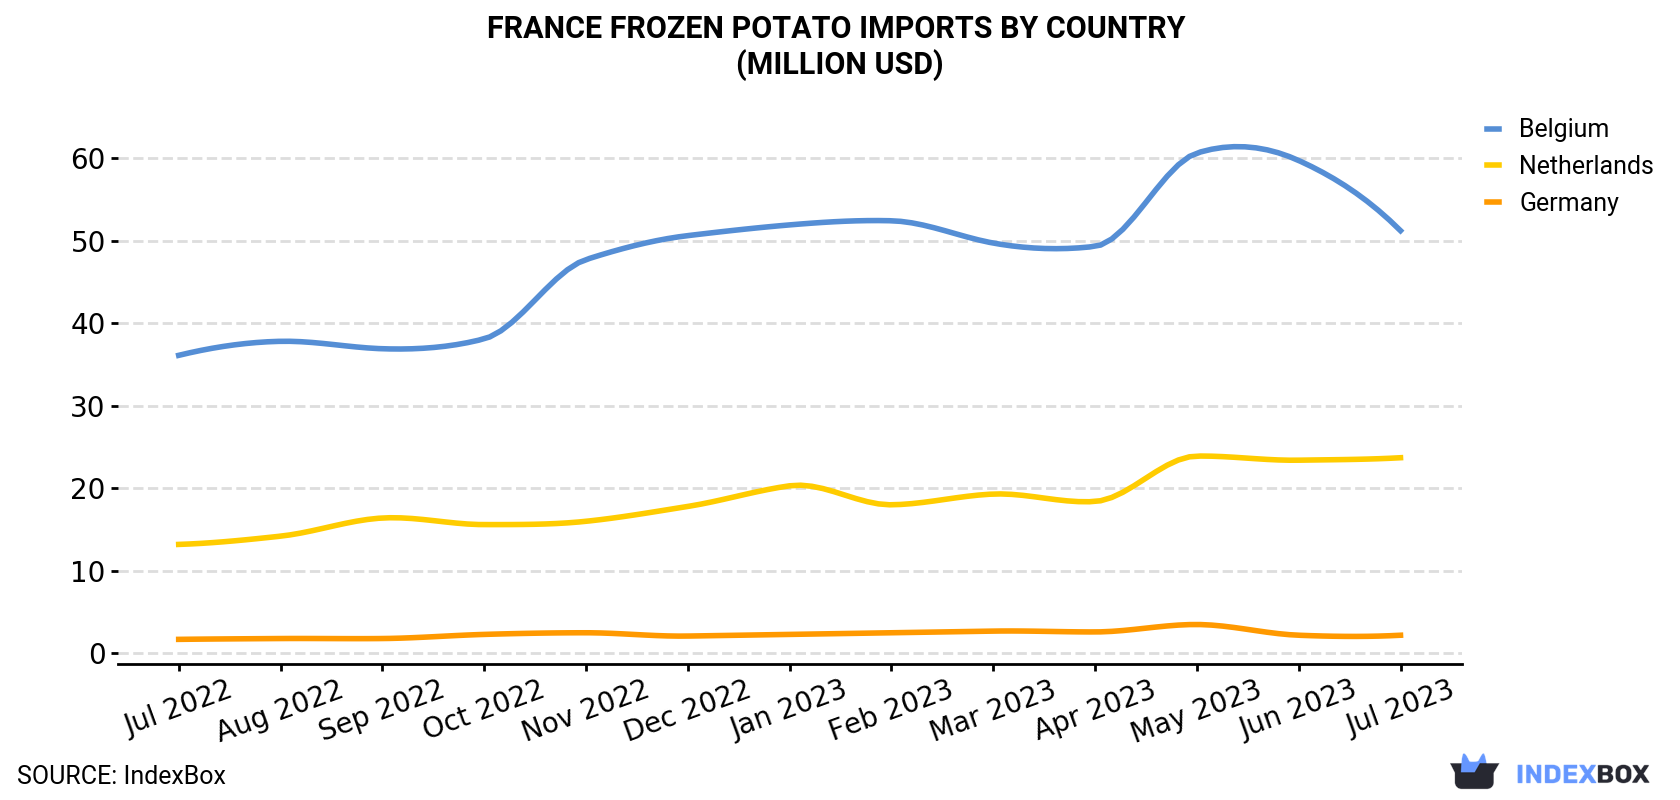 France Frozen Potato Imports By Country (Million USD)